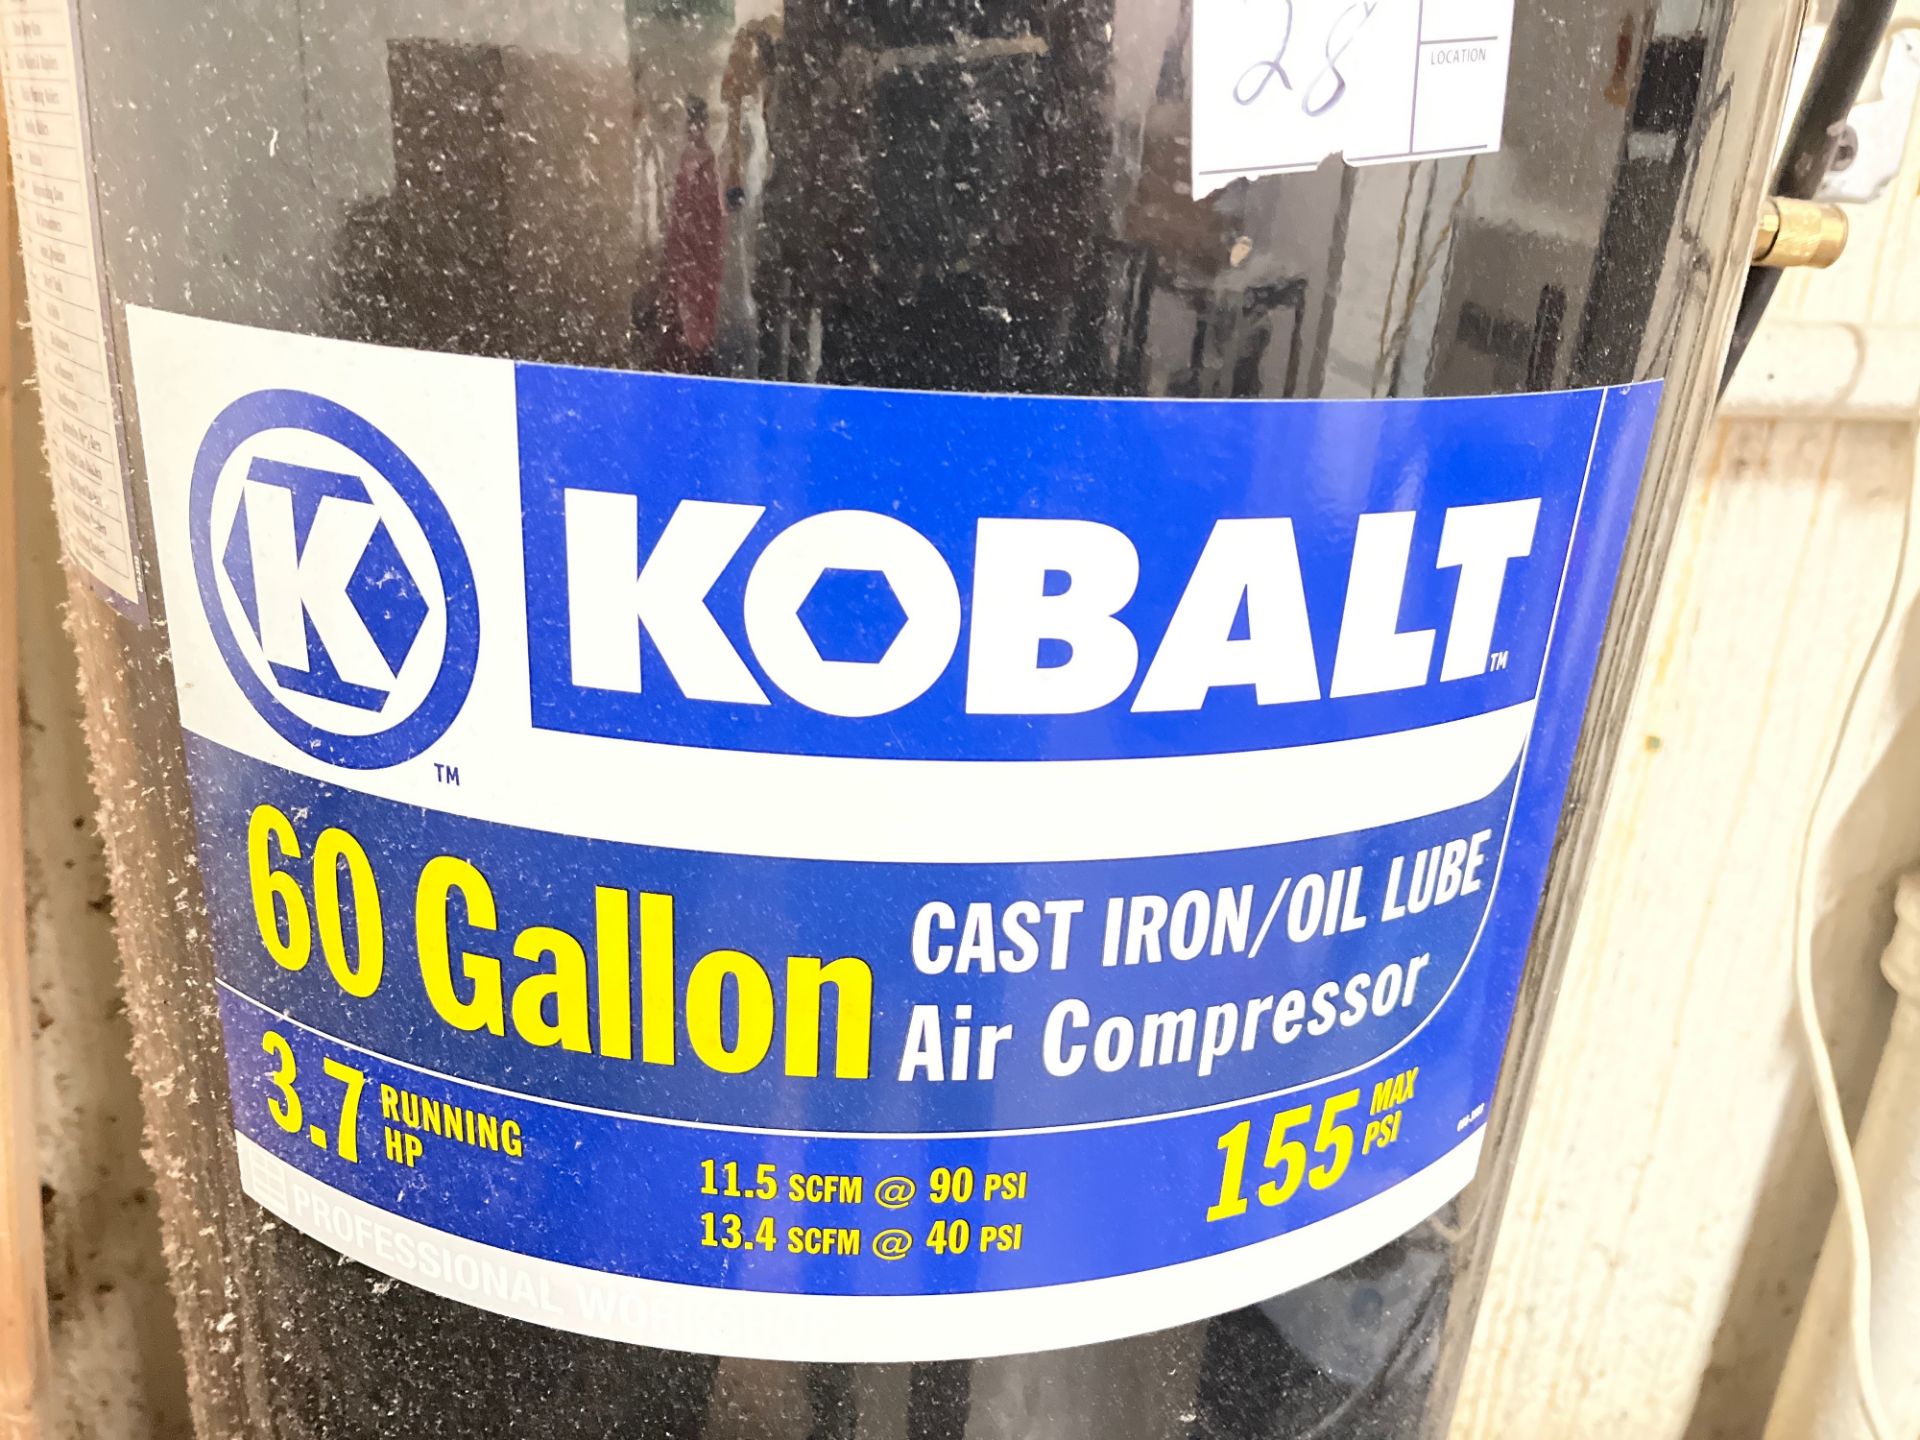 Kobalt 60gal Air Compressor - Image 3 of 3